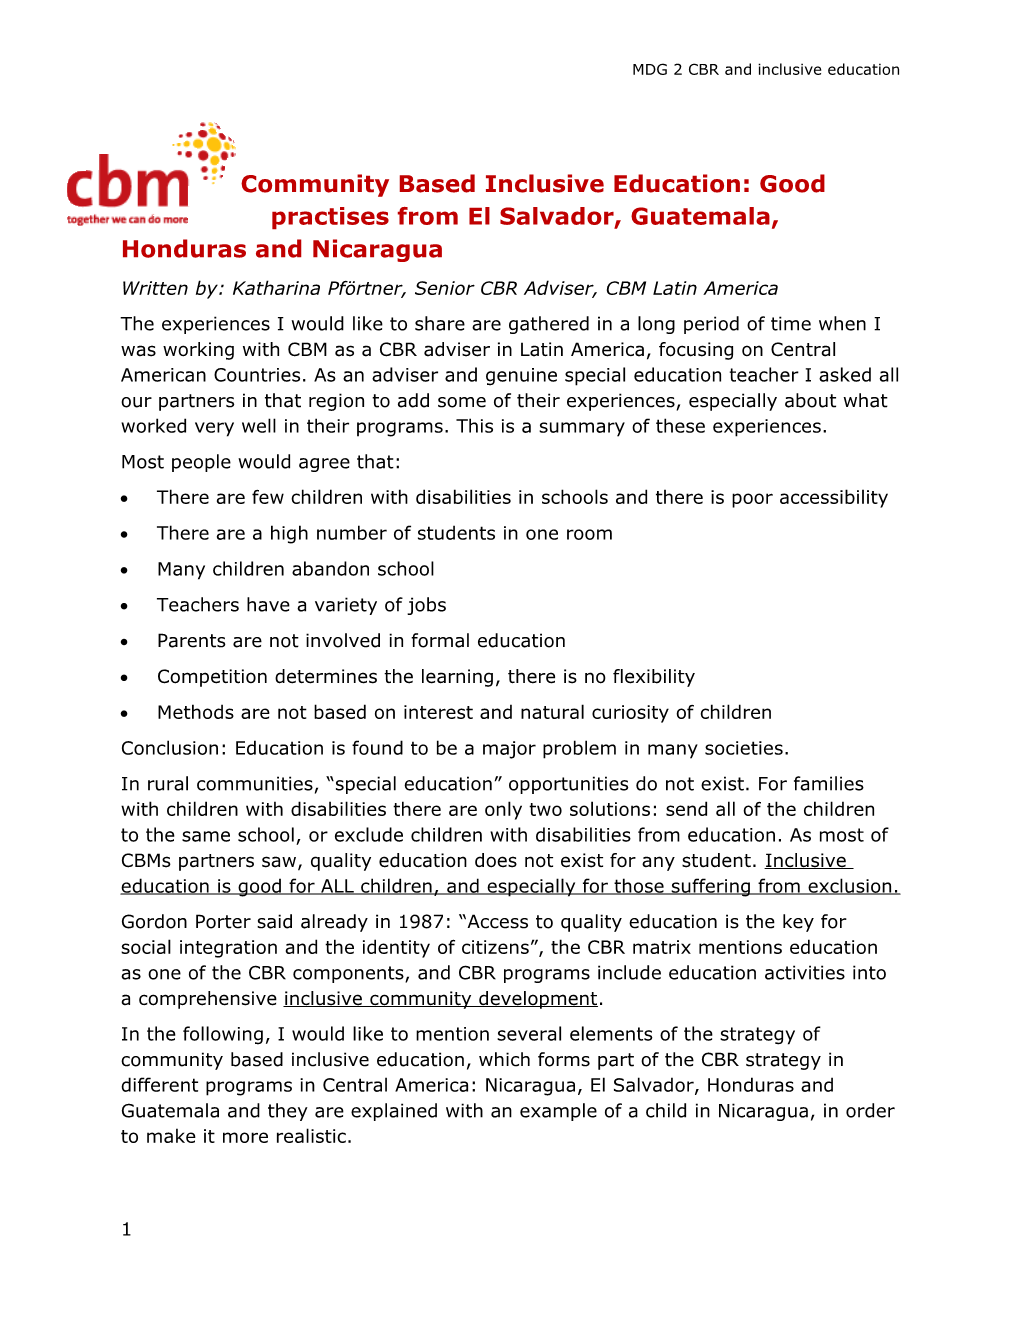 MDG 2 CBR and Inclusive Education